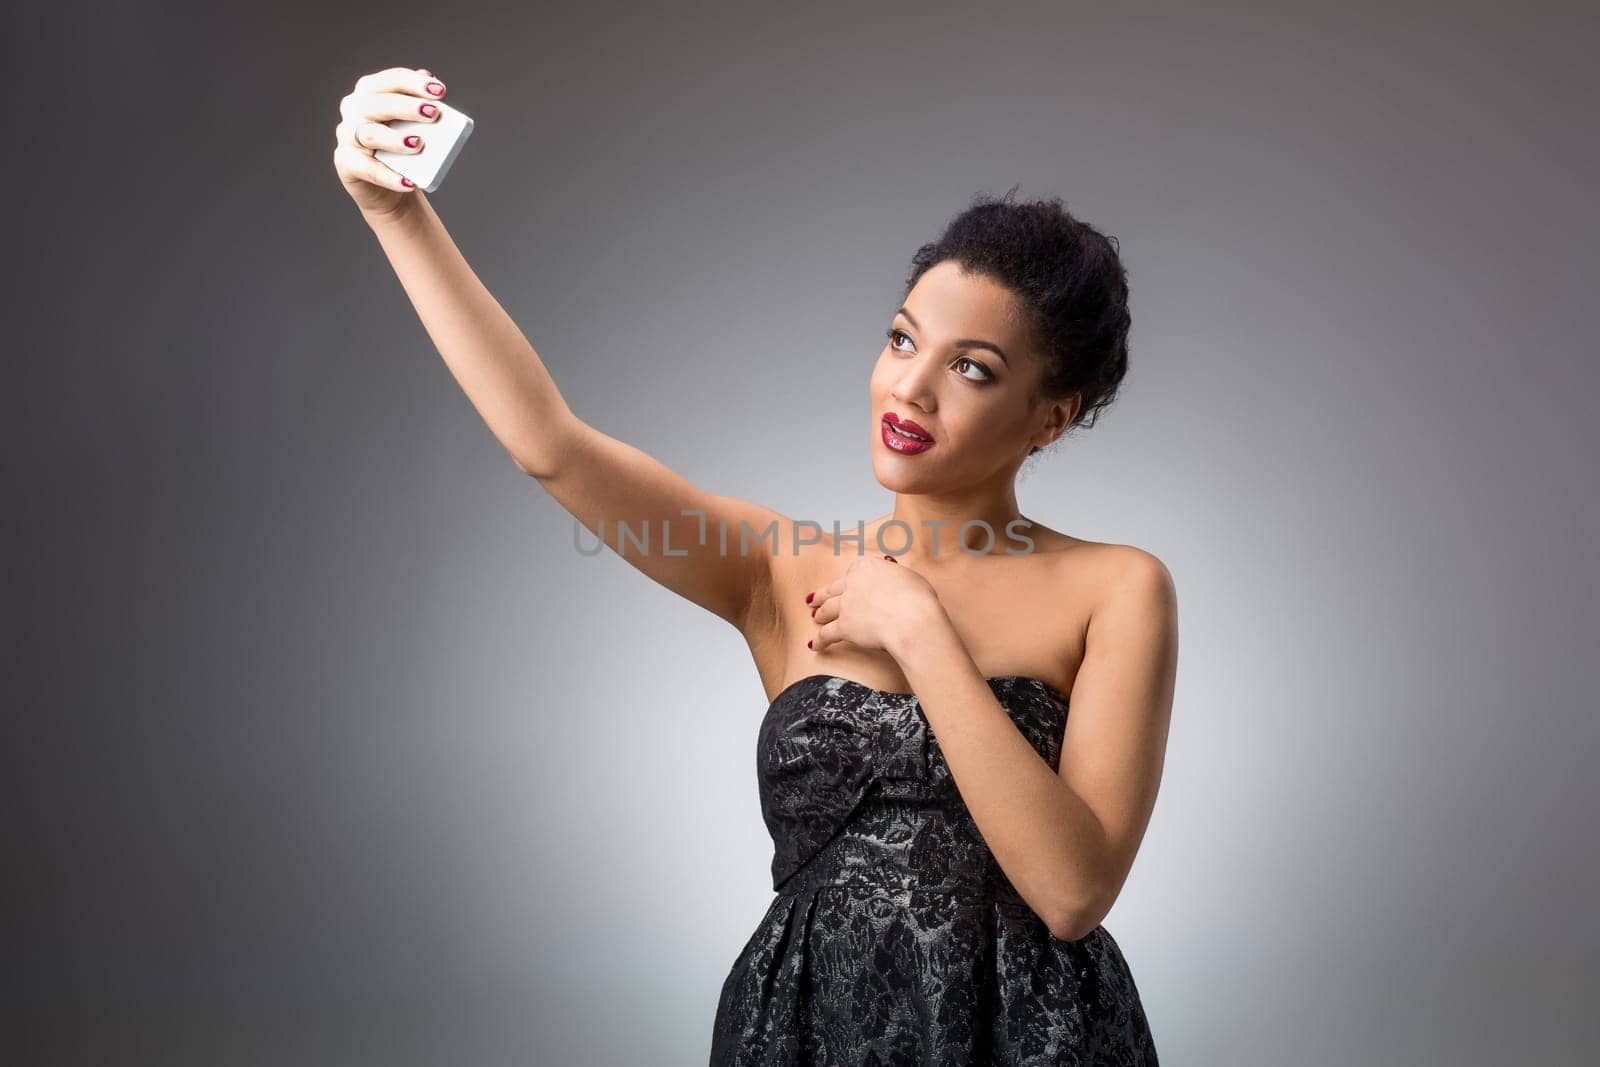 Portrait of a Beautiful brunette doing selfie in a black dress on a light background